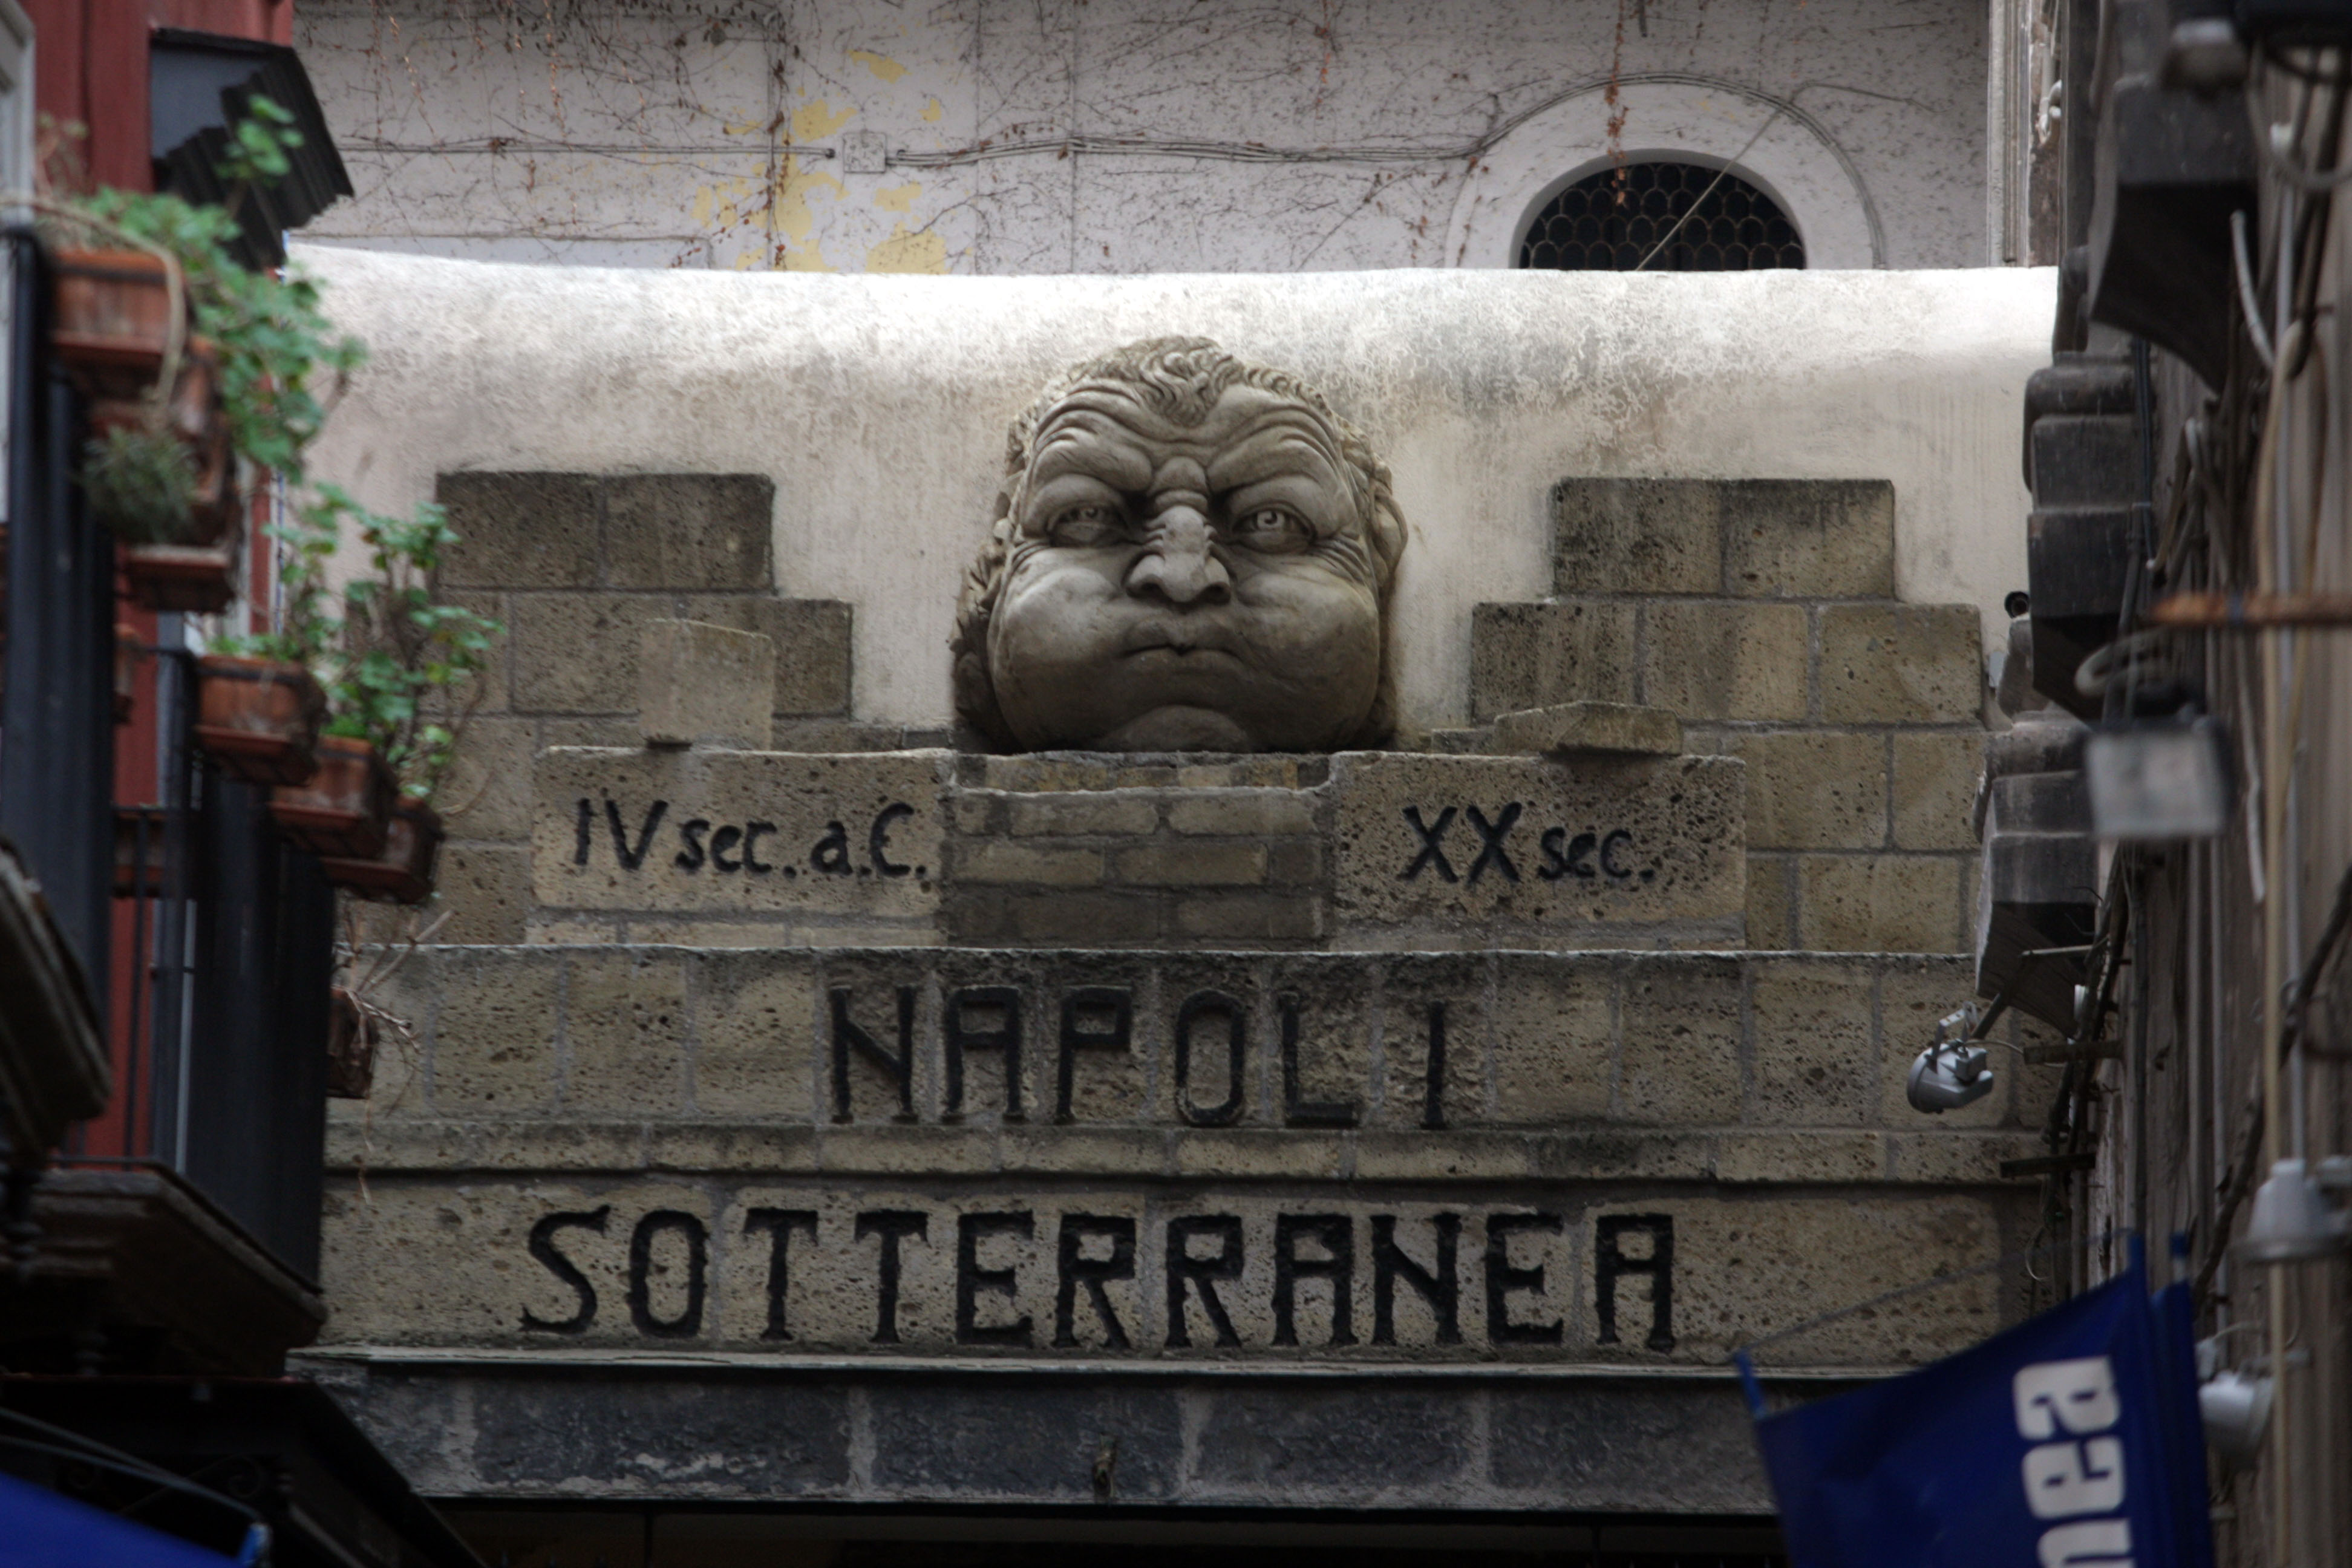 Napoli Sotterranea (Naples Underground)